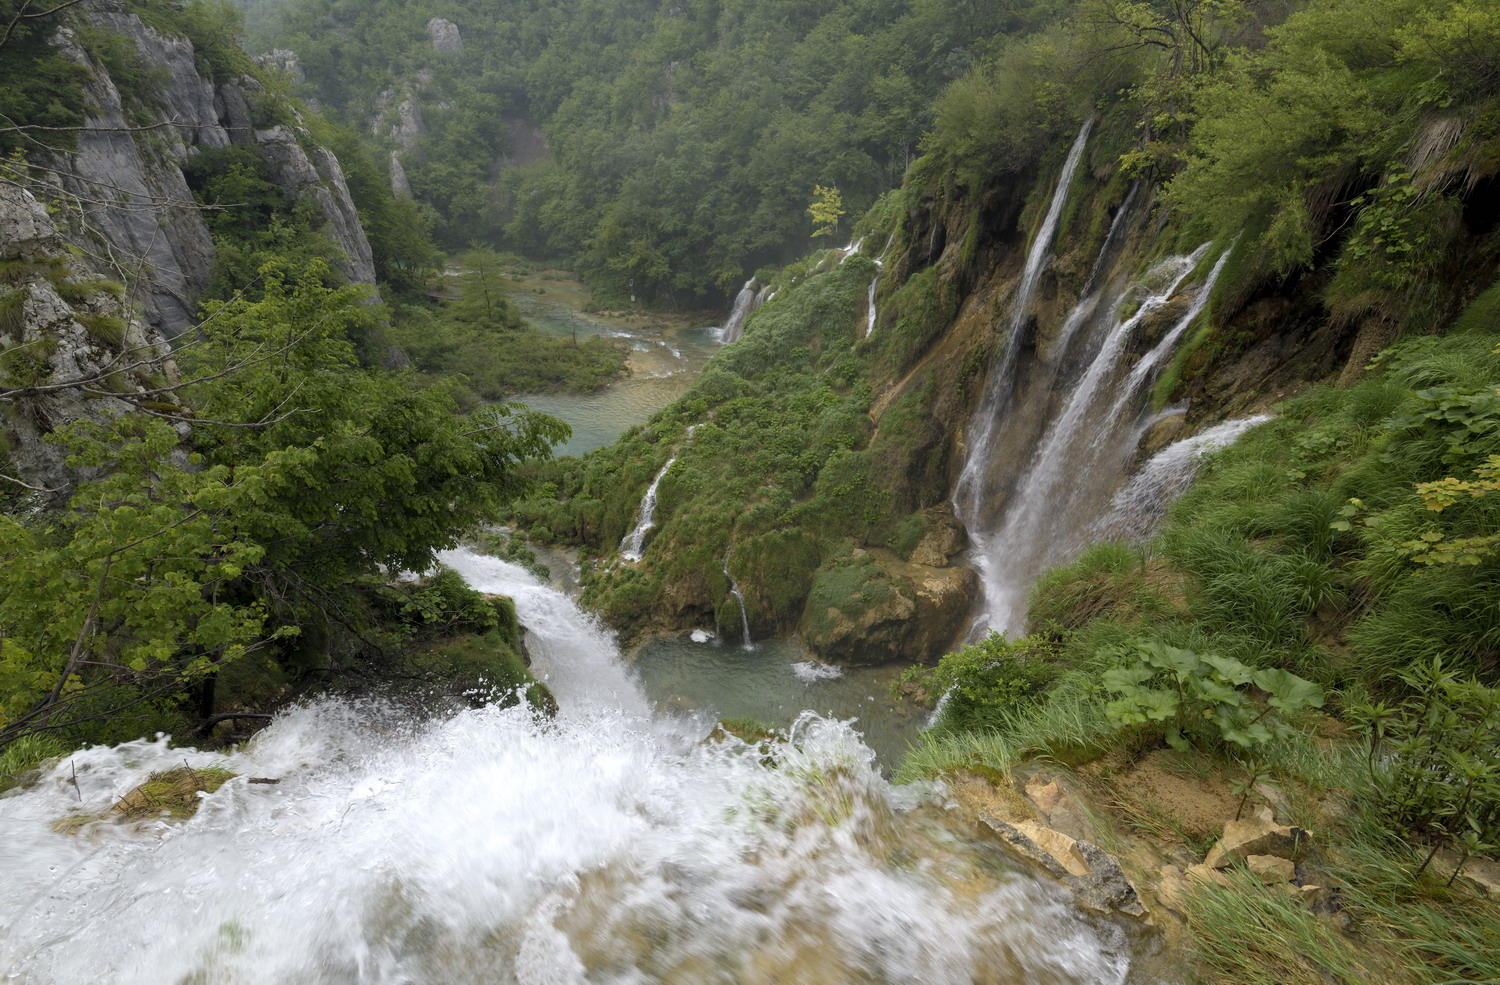 DSC_6365_1A2 - Sastavci Water Falls (Plitvice National Park)